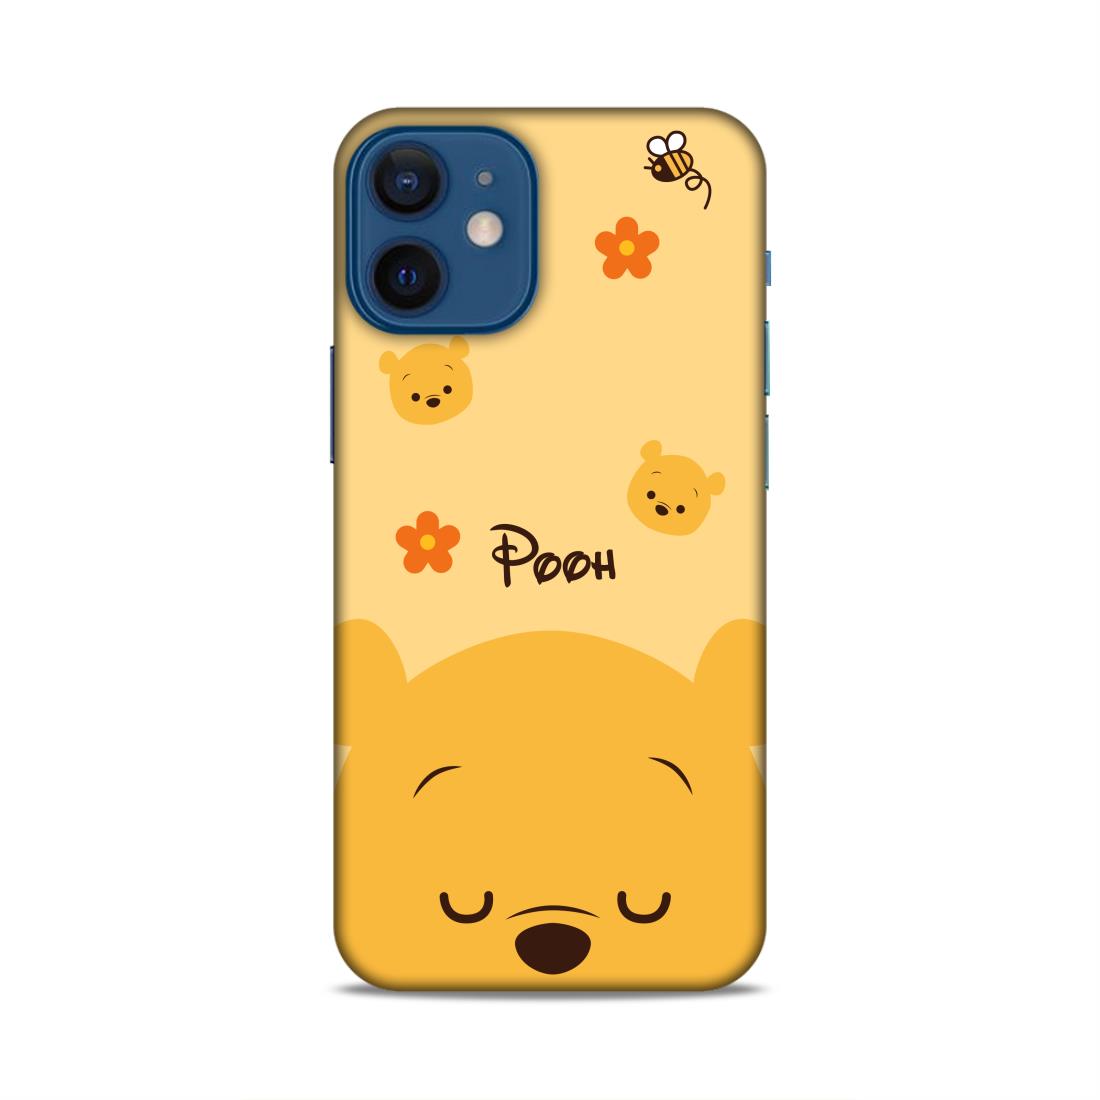 Pooh Cartton Hard Back Case For Apple iPhone 12 Mini